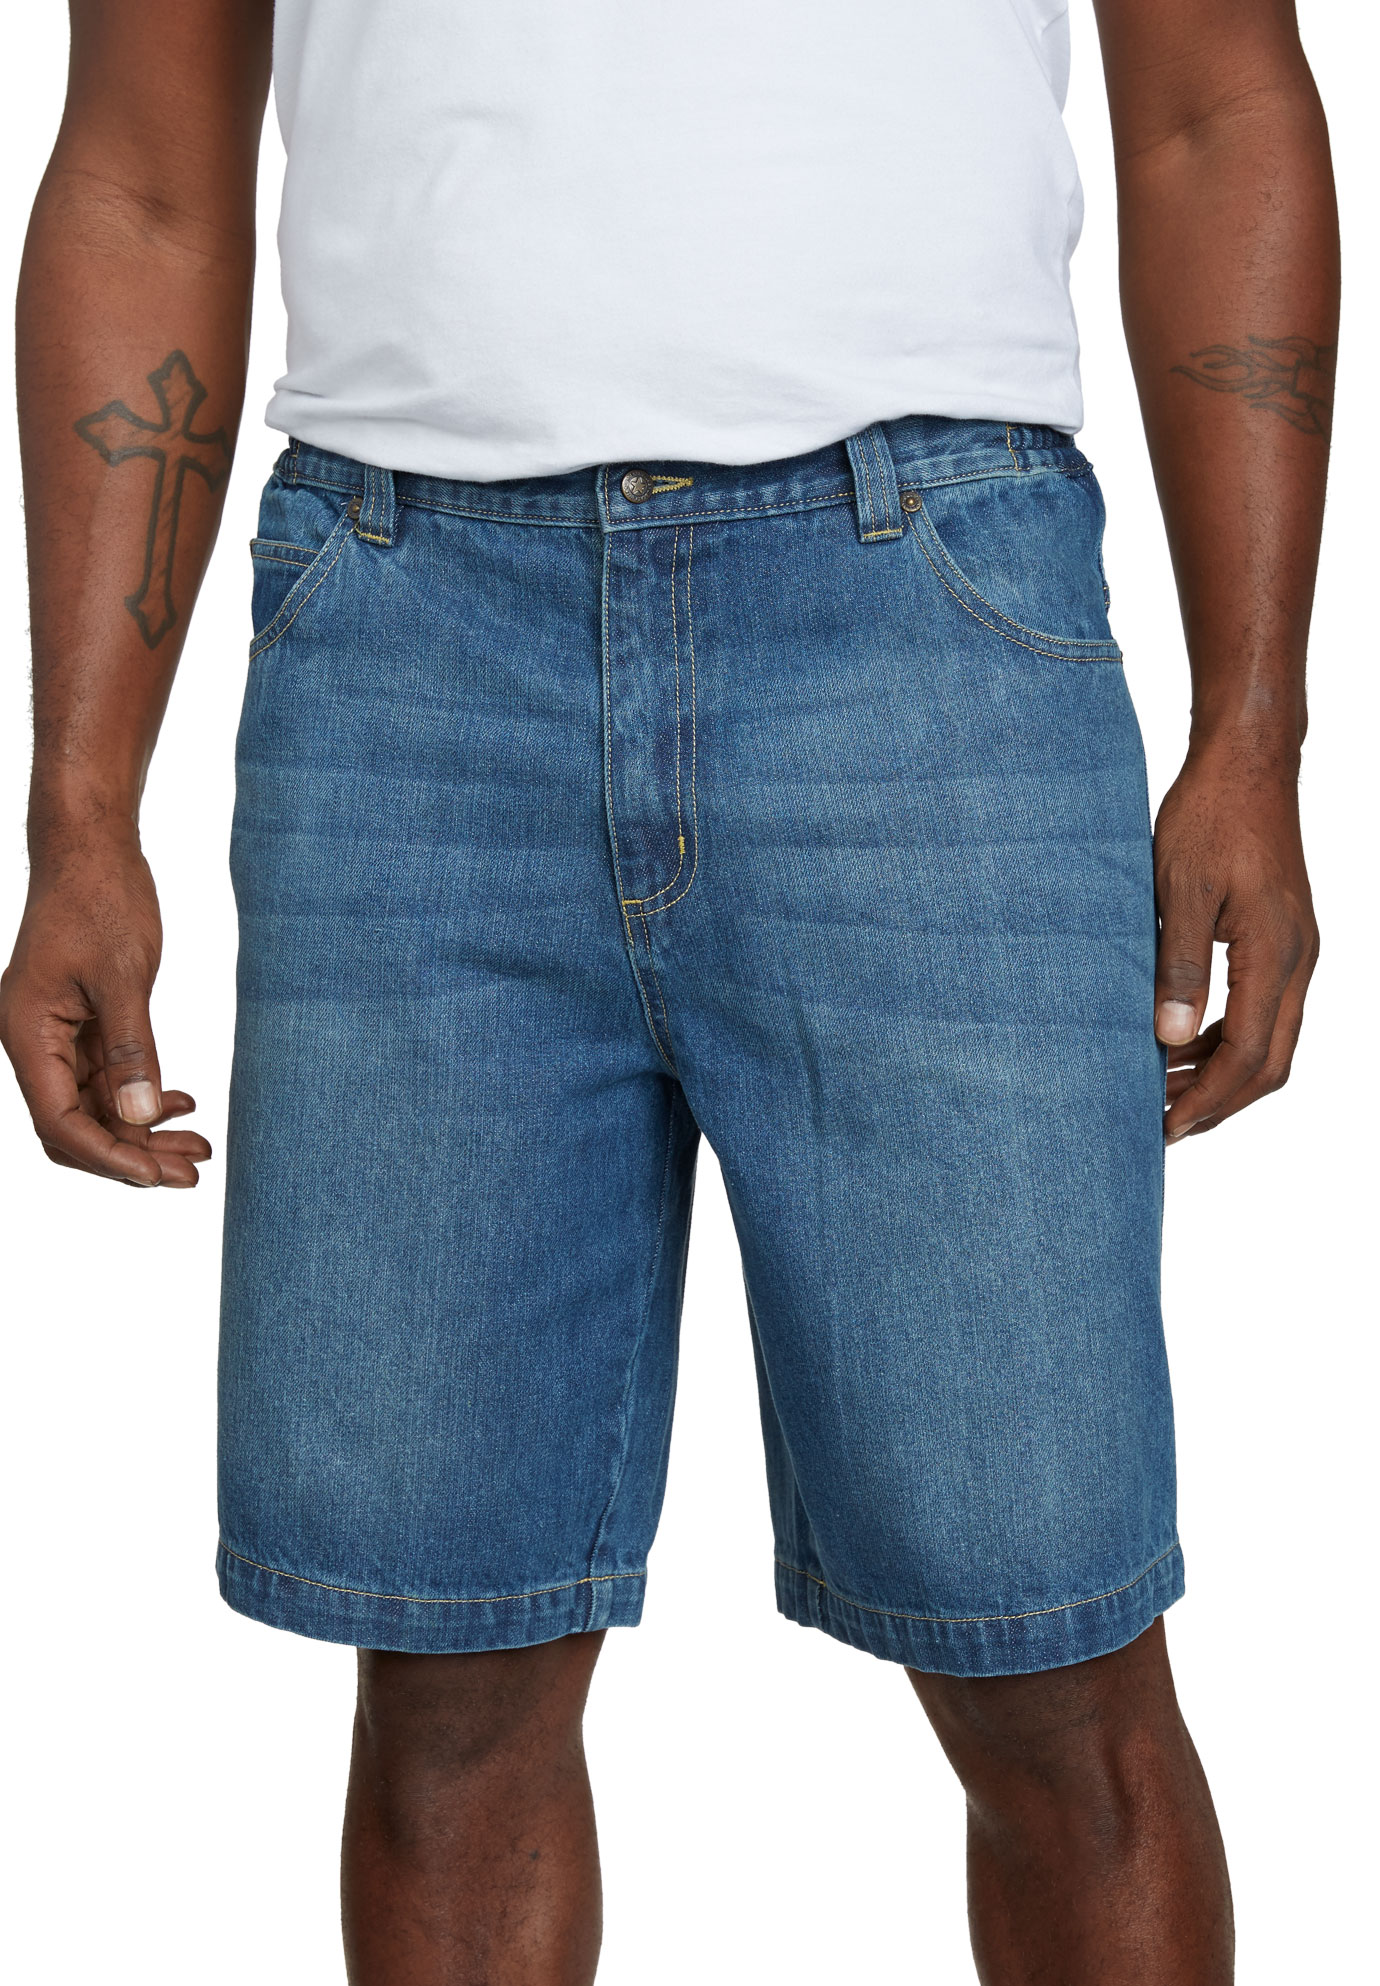 IDEALSANXUN Men’s 3//4 Denim Shorts Big/&Tall Loose Fit Jeans Shorts